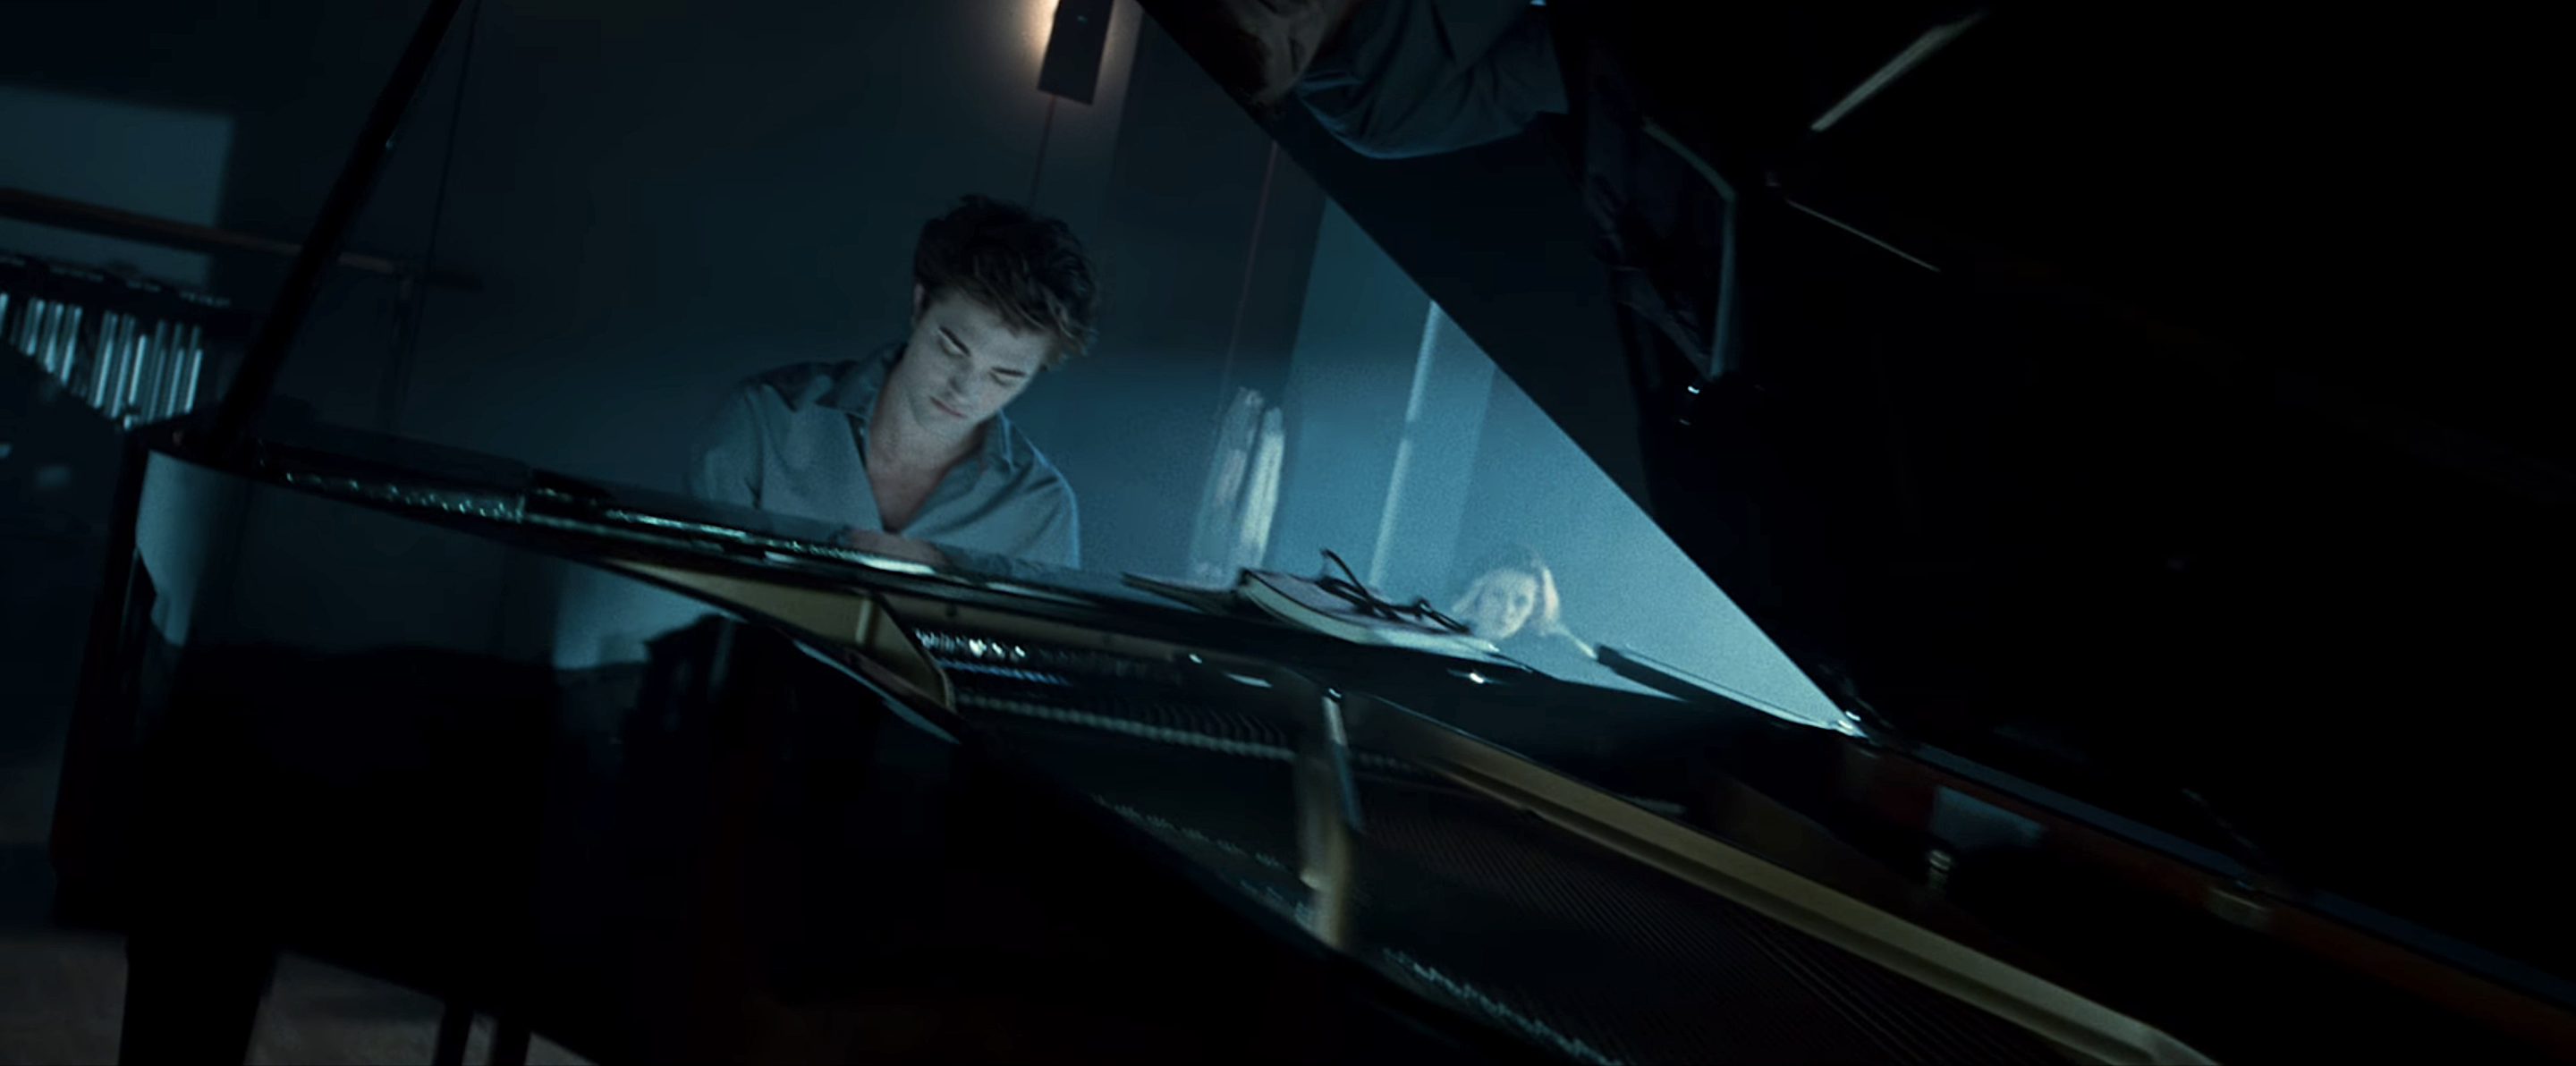 Edward playing the piano